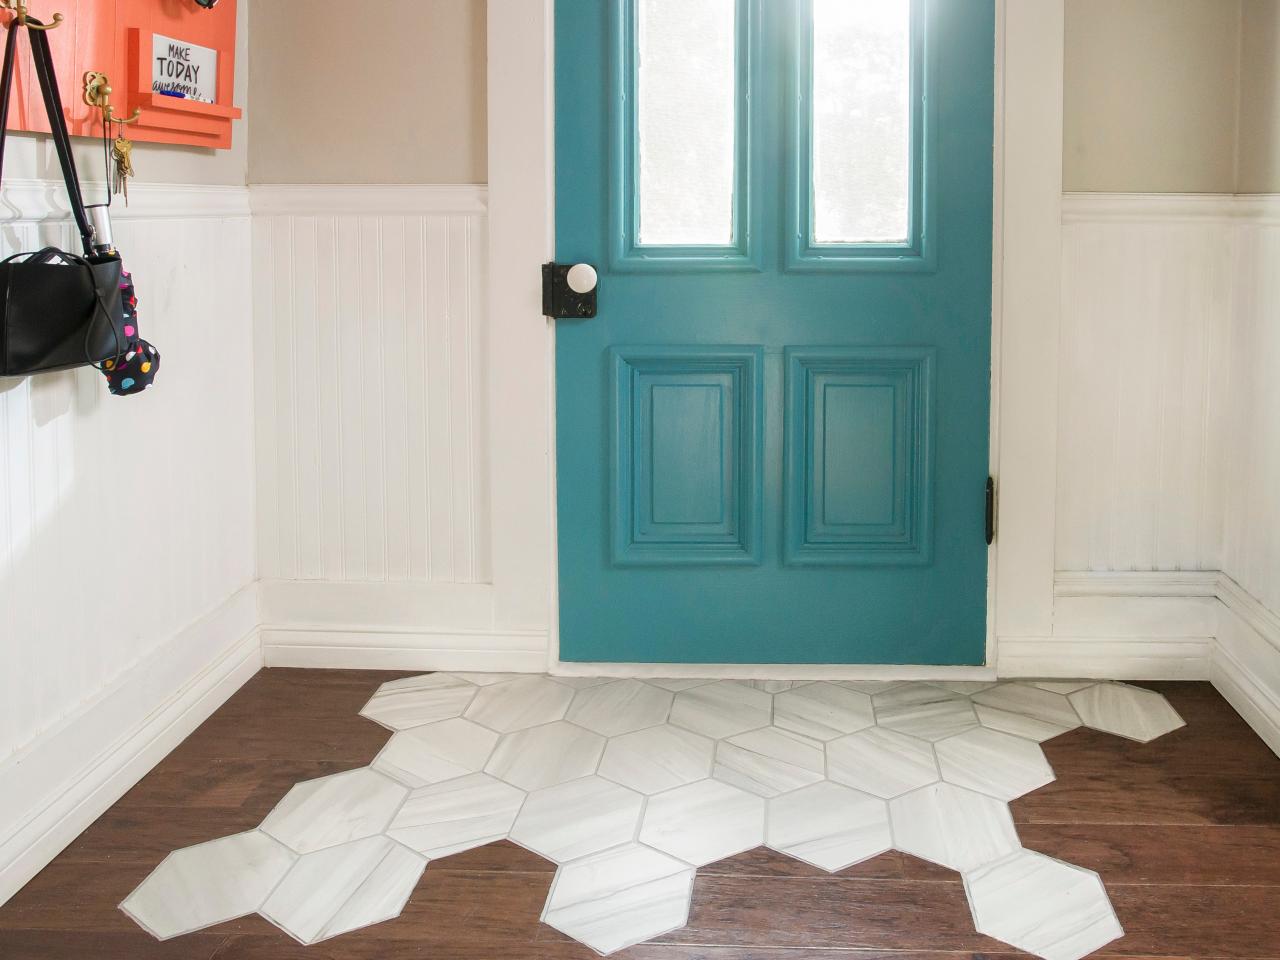 A Tile Rug Within Hardwood Floor, Can I Put Tile On Hardwood Floors